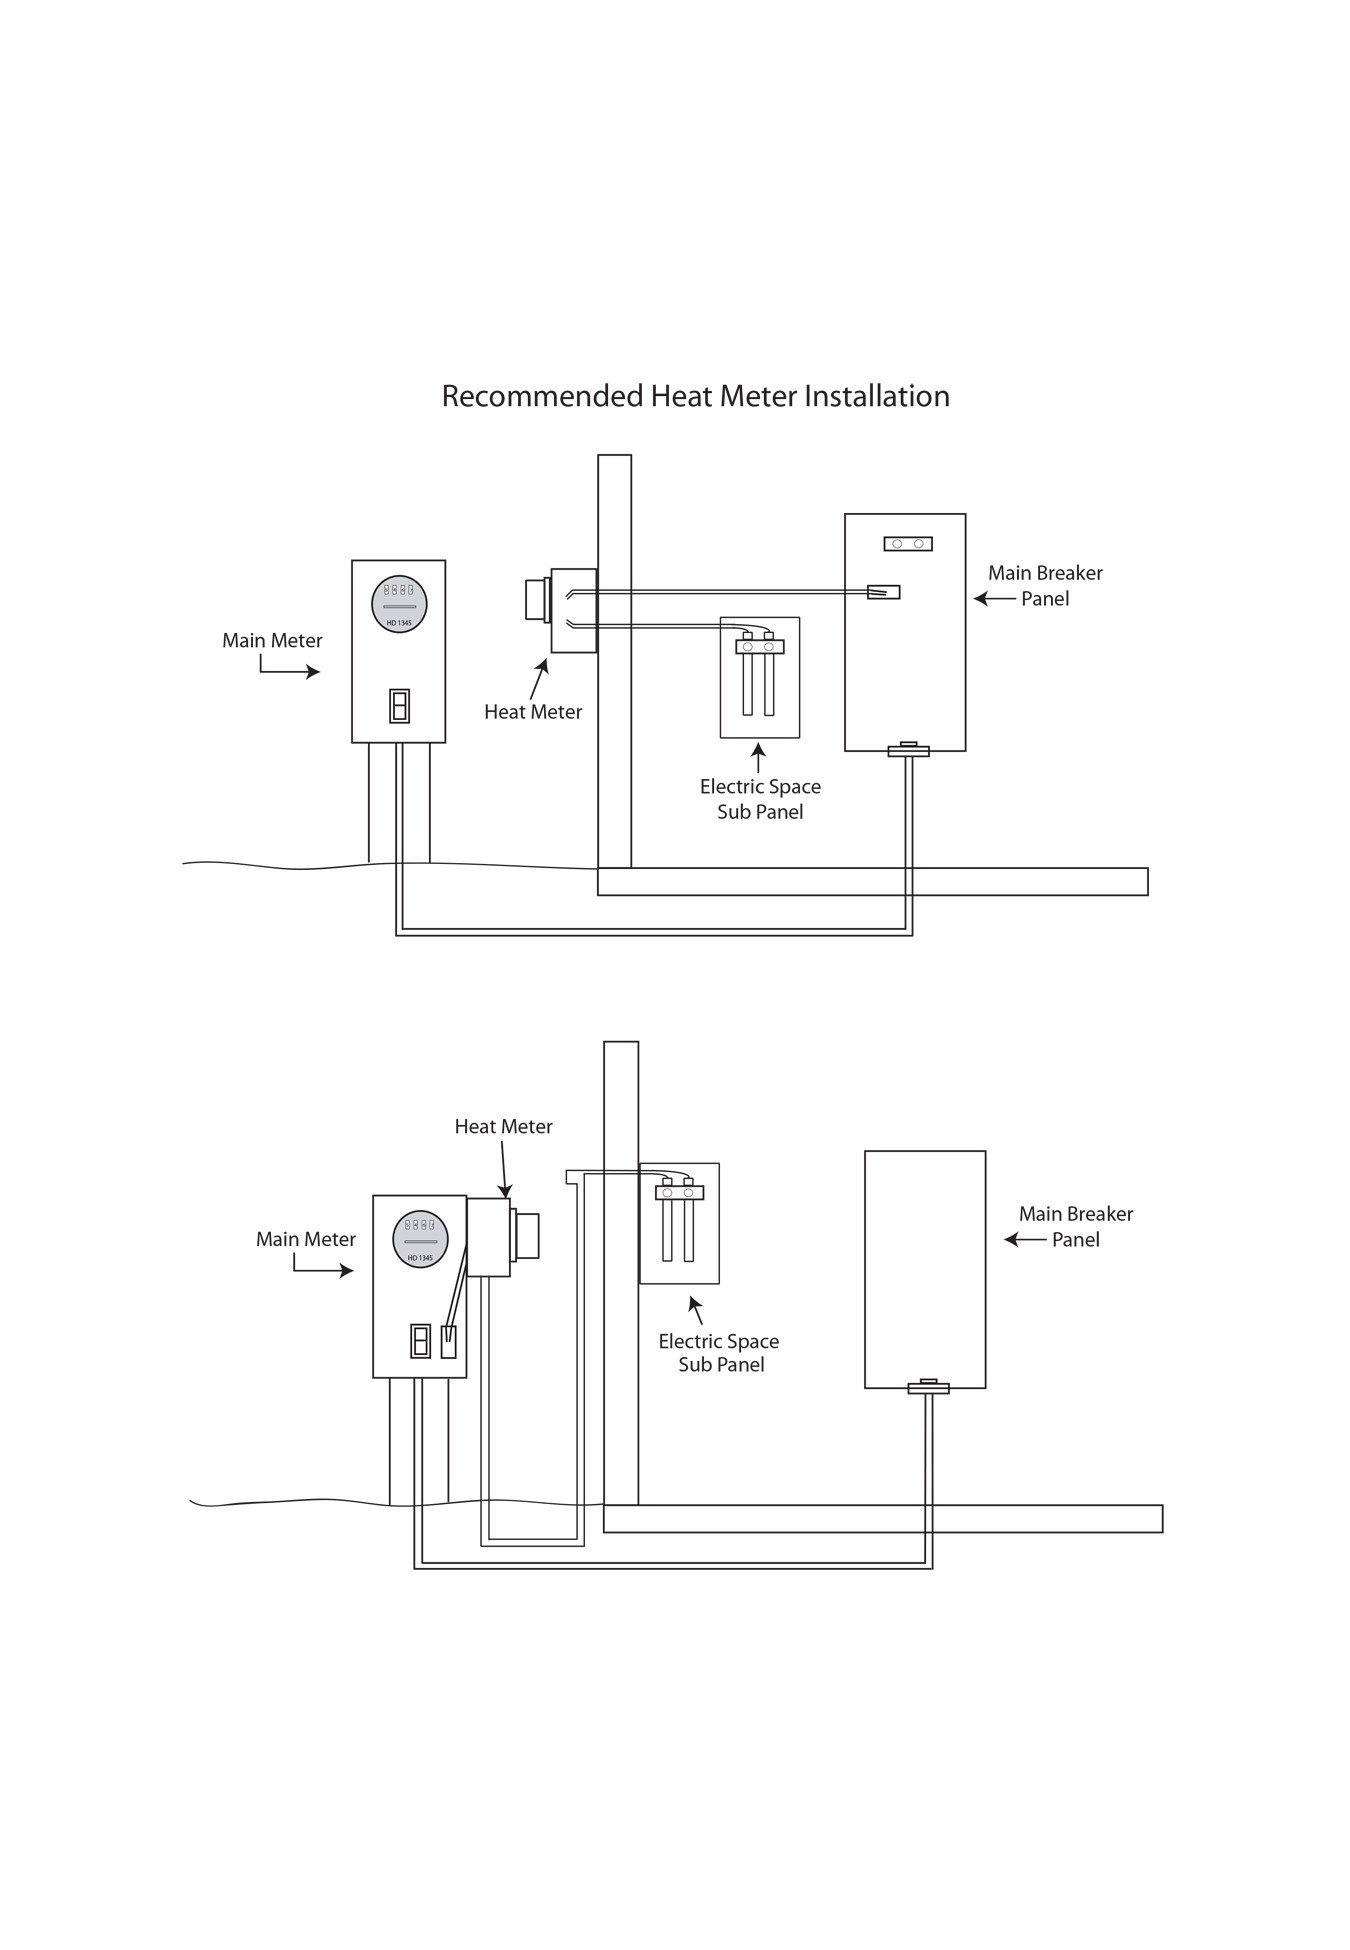 Heat program schematic